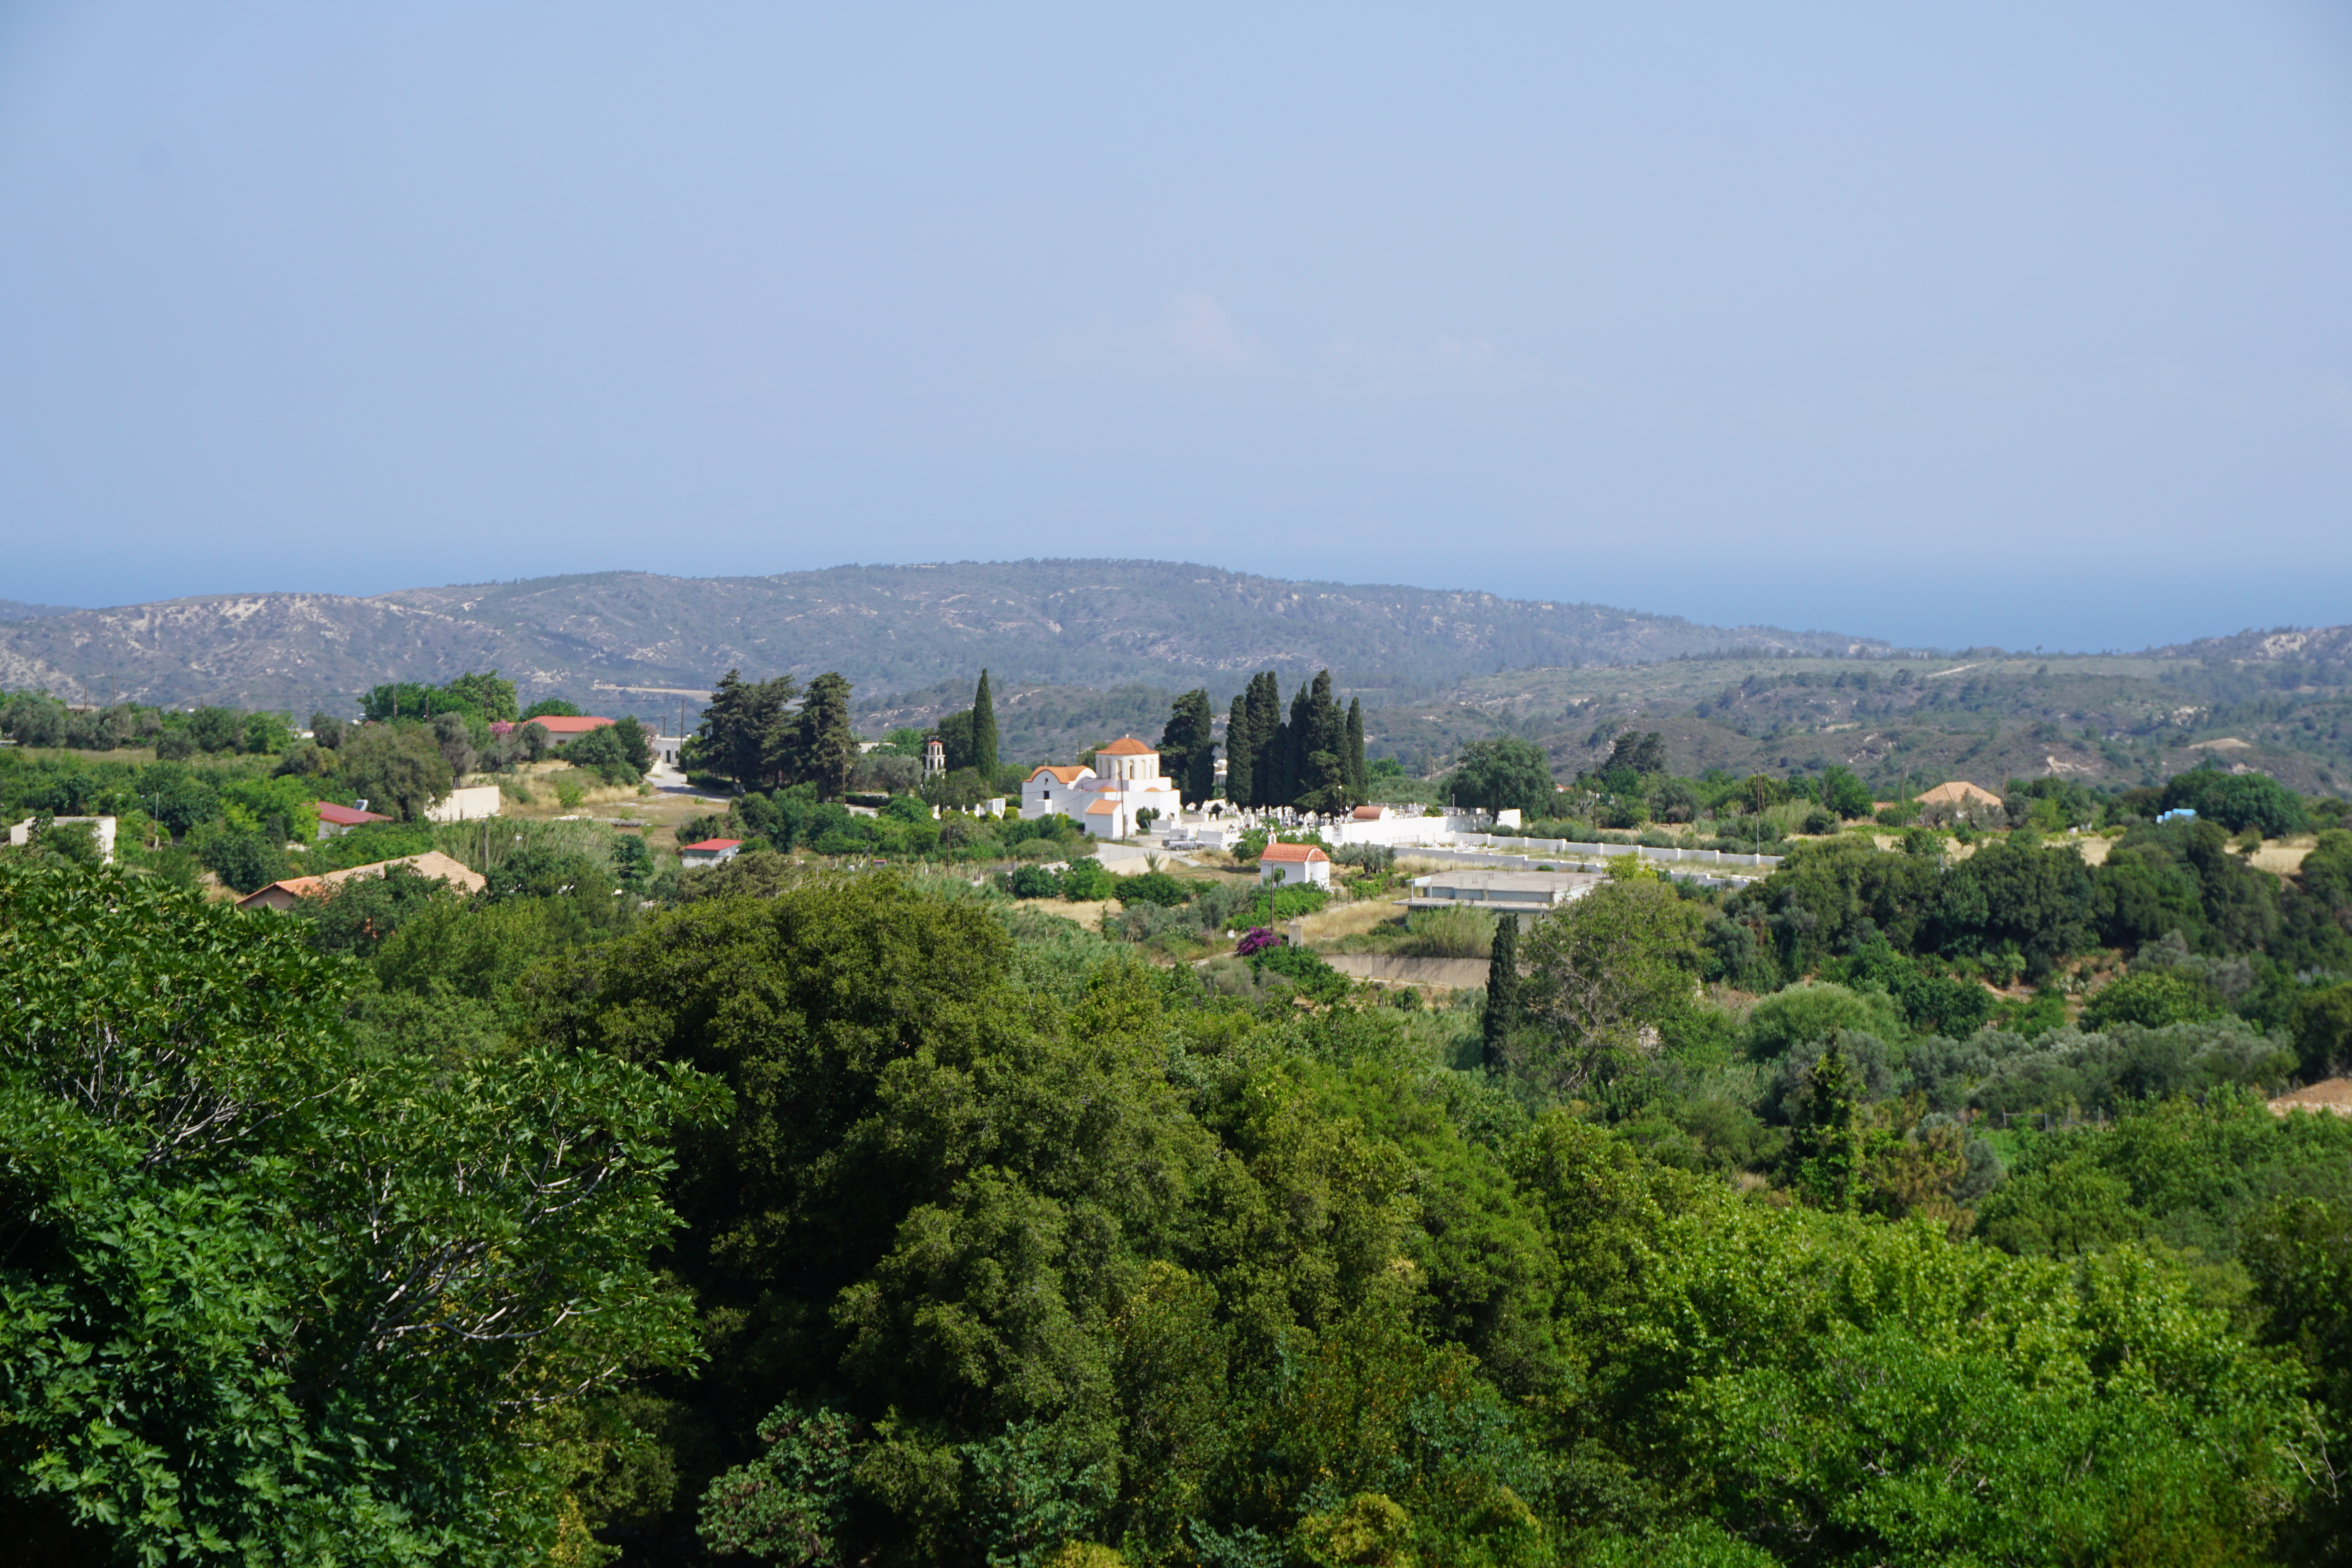 Salakos Village and Church